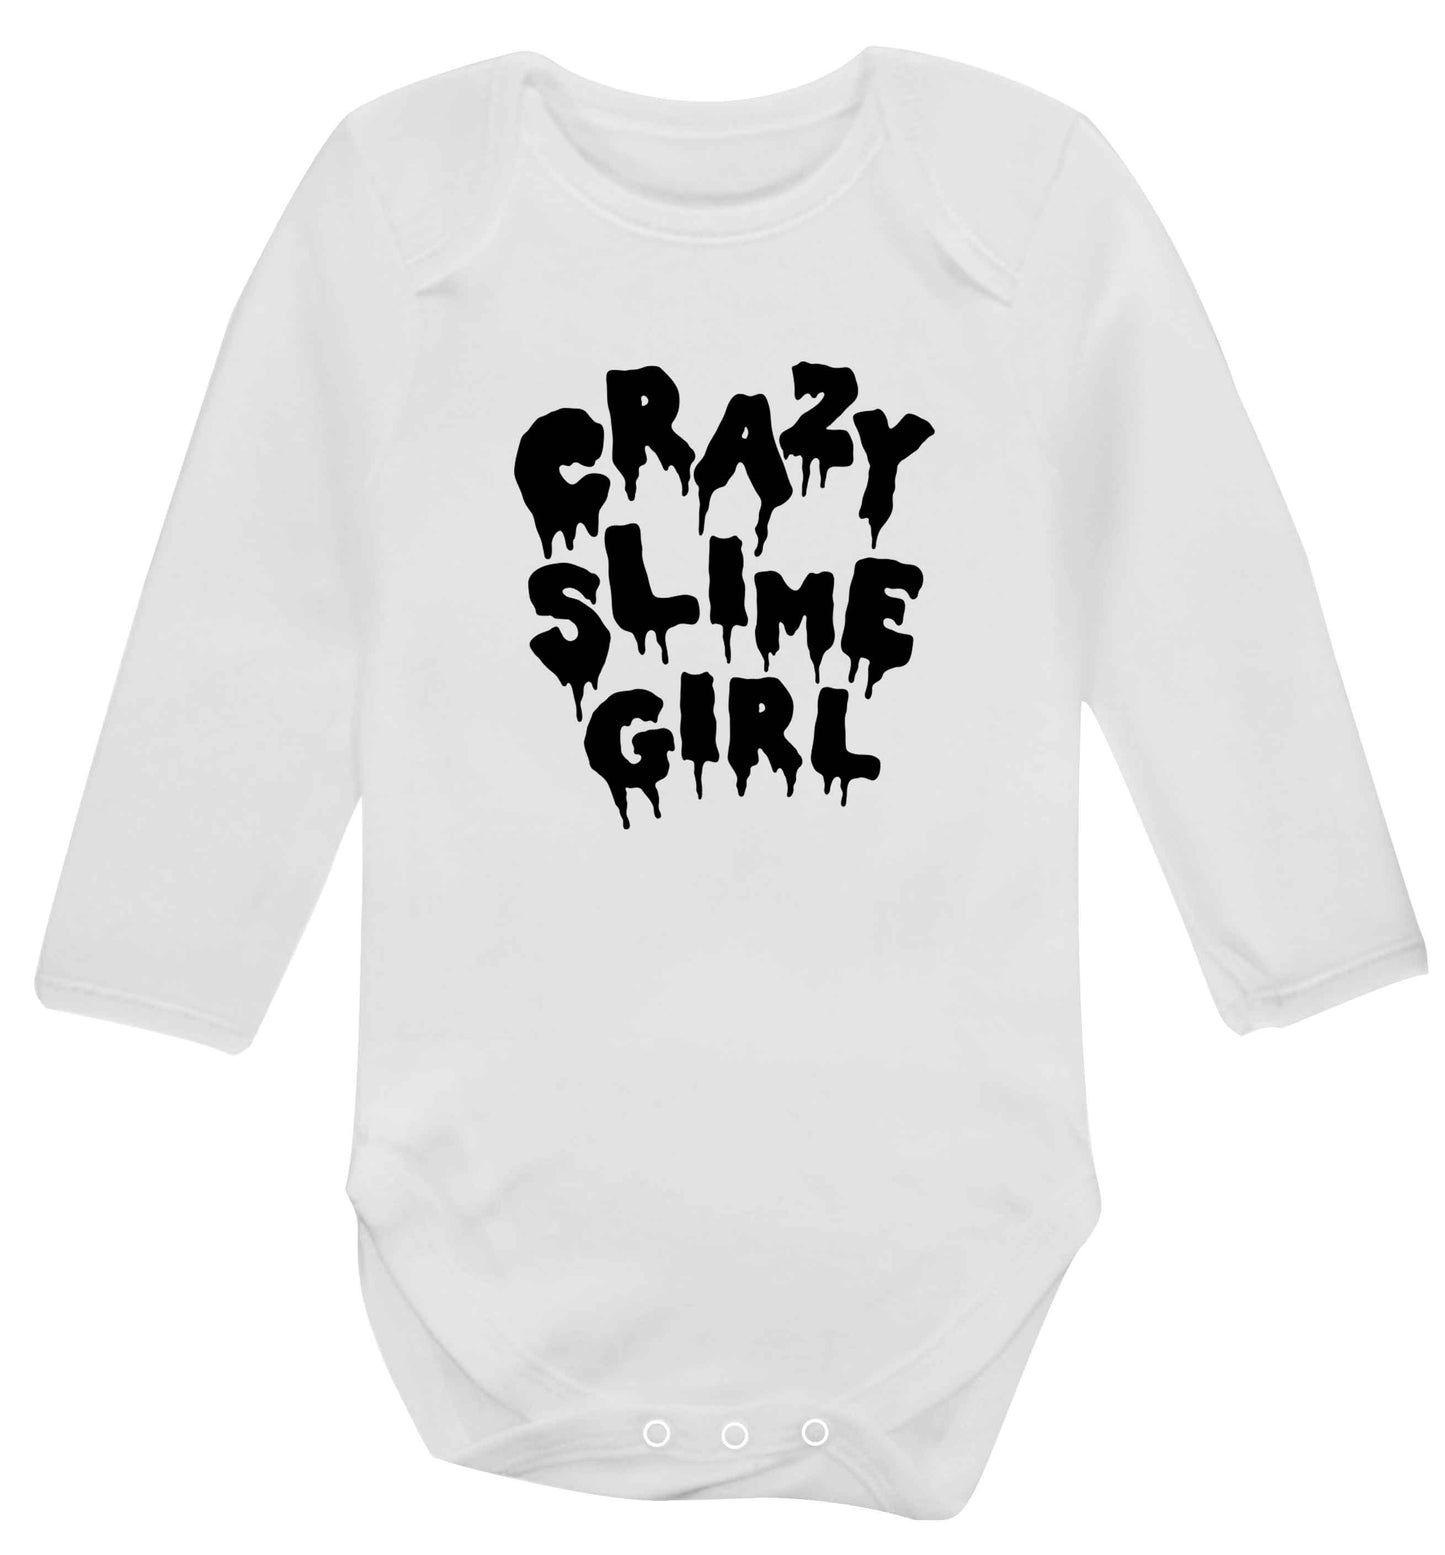 Crazy slime girl baby vest long sleeved white 6-12 months